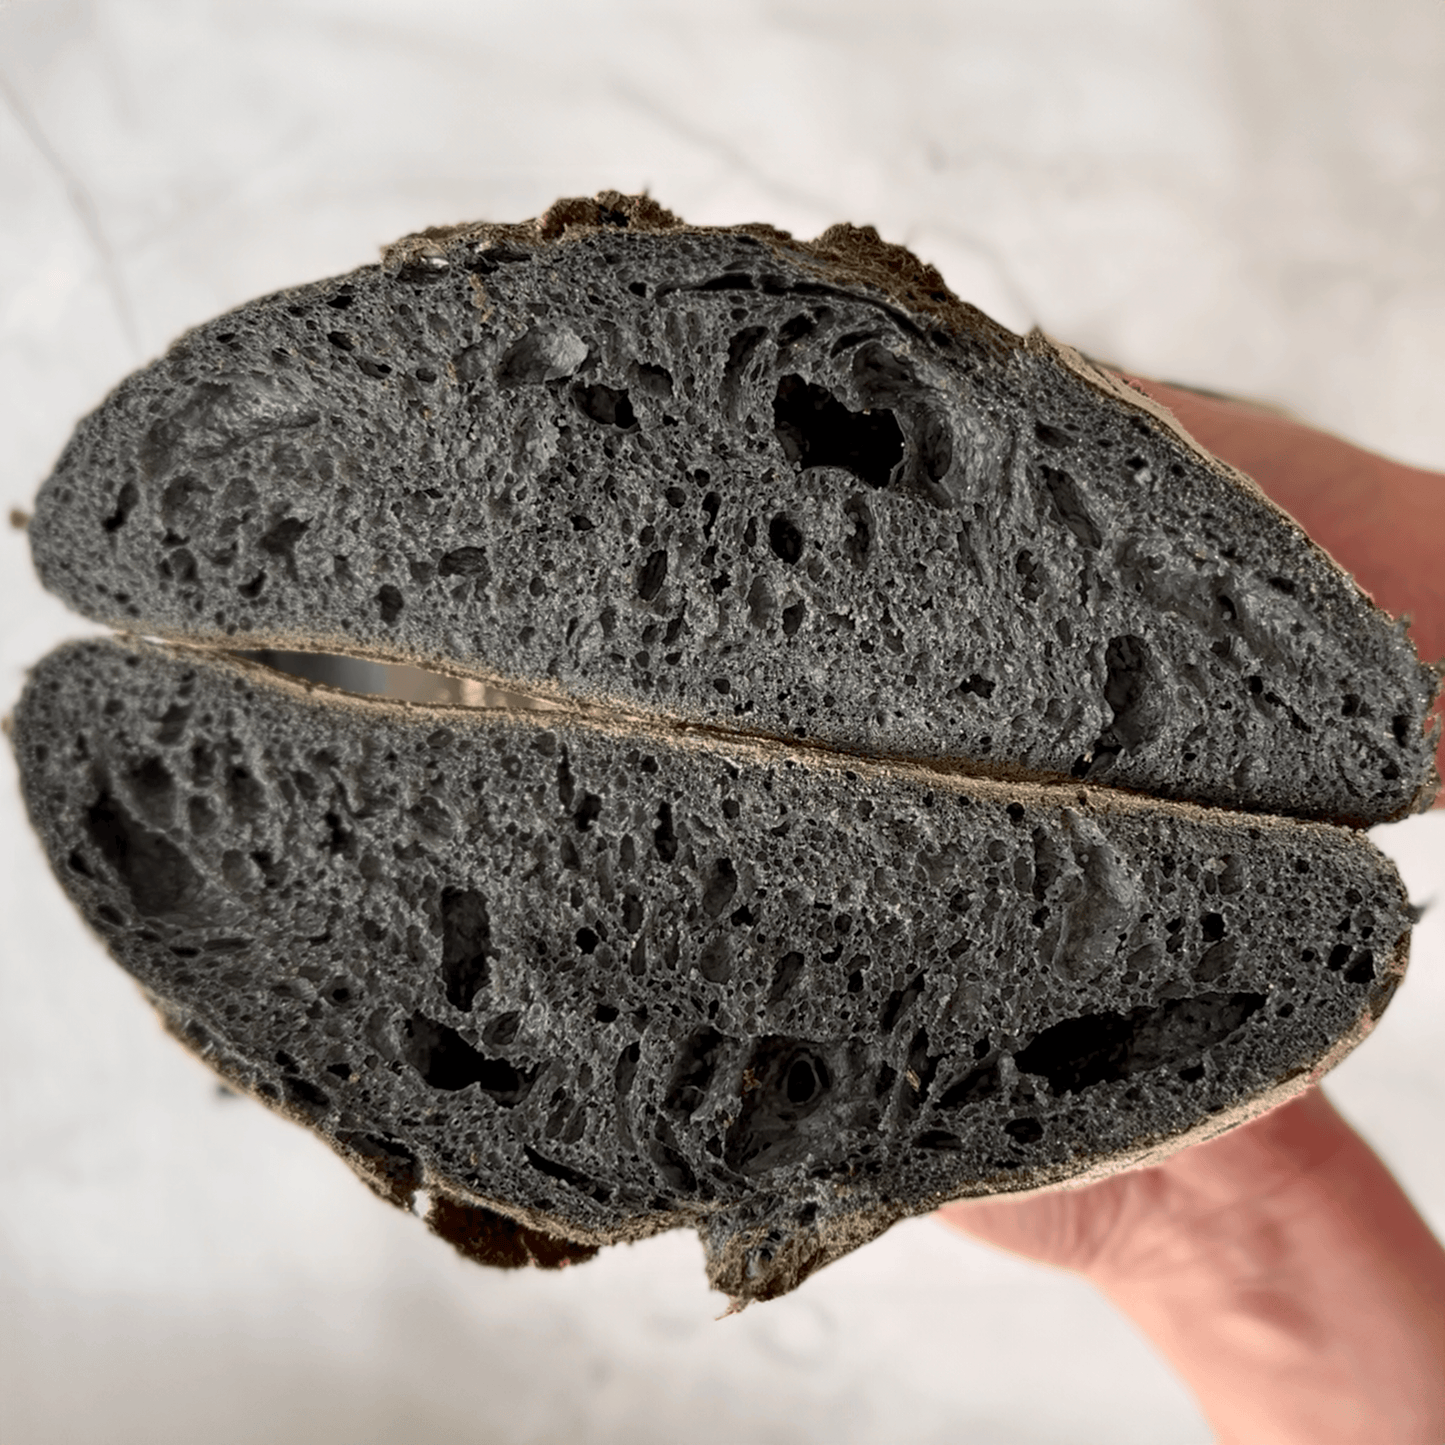 Vegetable Carbon Black Powder - Natural Food Colouring for Sourdough